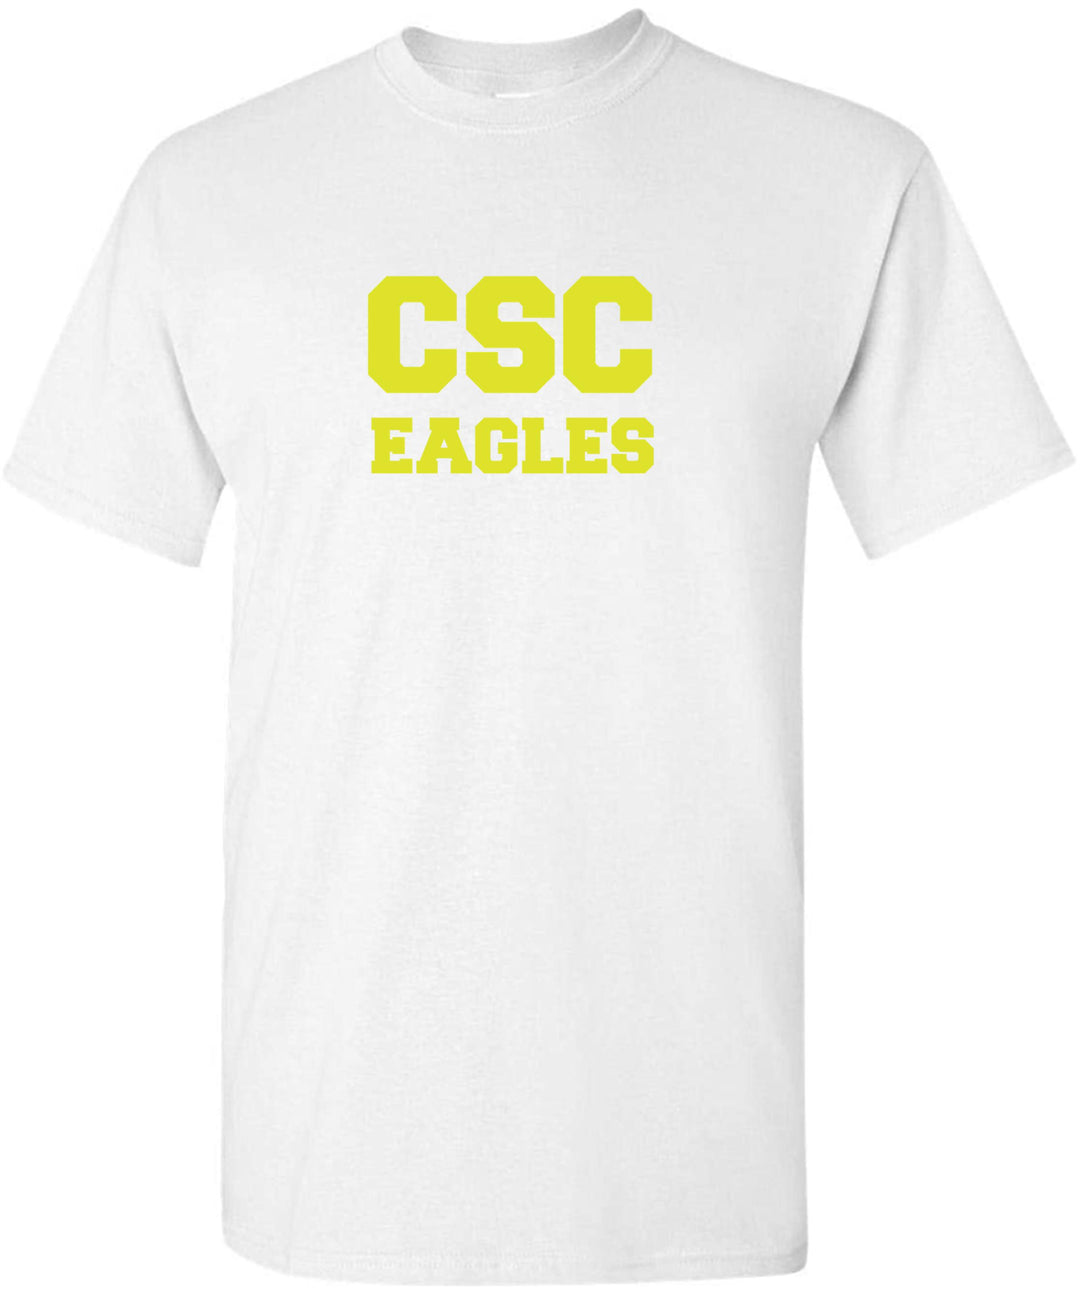 CSC Short-Sleeve T-Shirt Calcasieu Soccer Club YOUTH SMALL BLACK - Third Coast Soccer